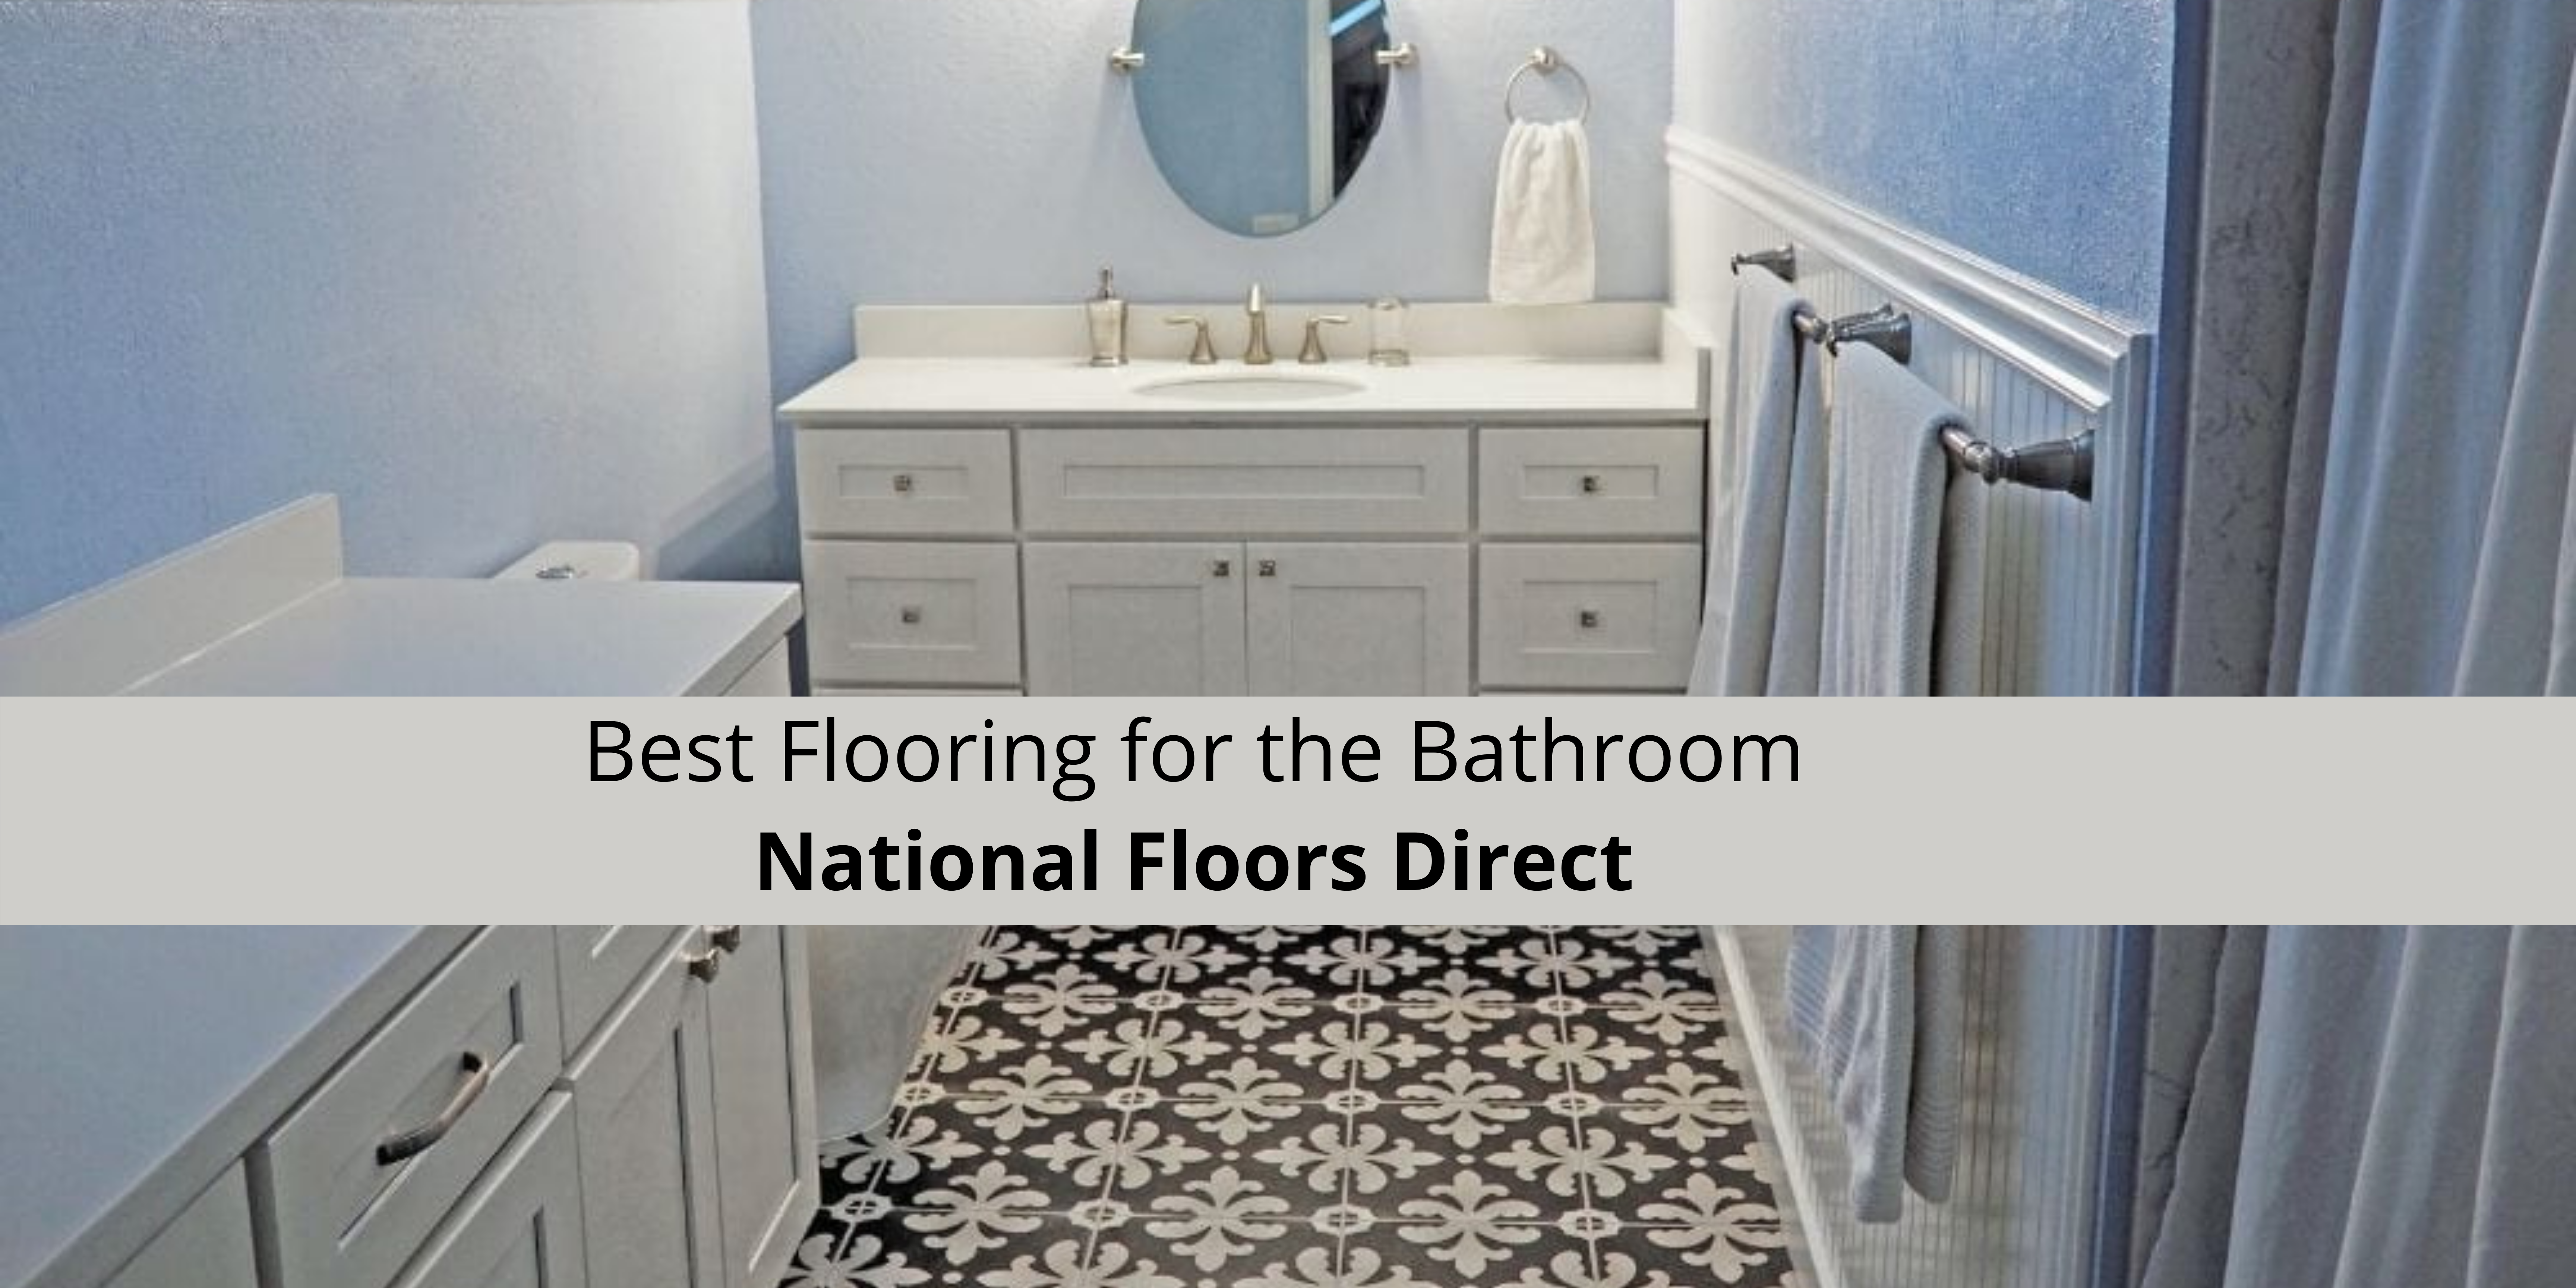 National Floors Direct: Best Flooring for the Bathroom